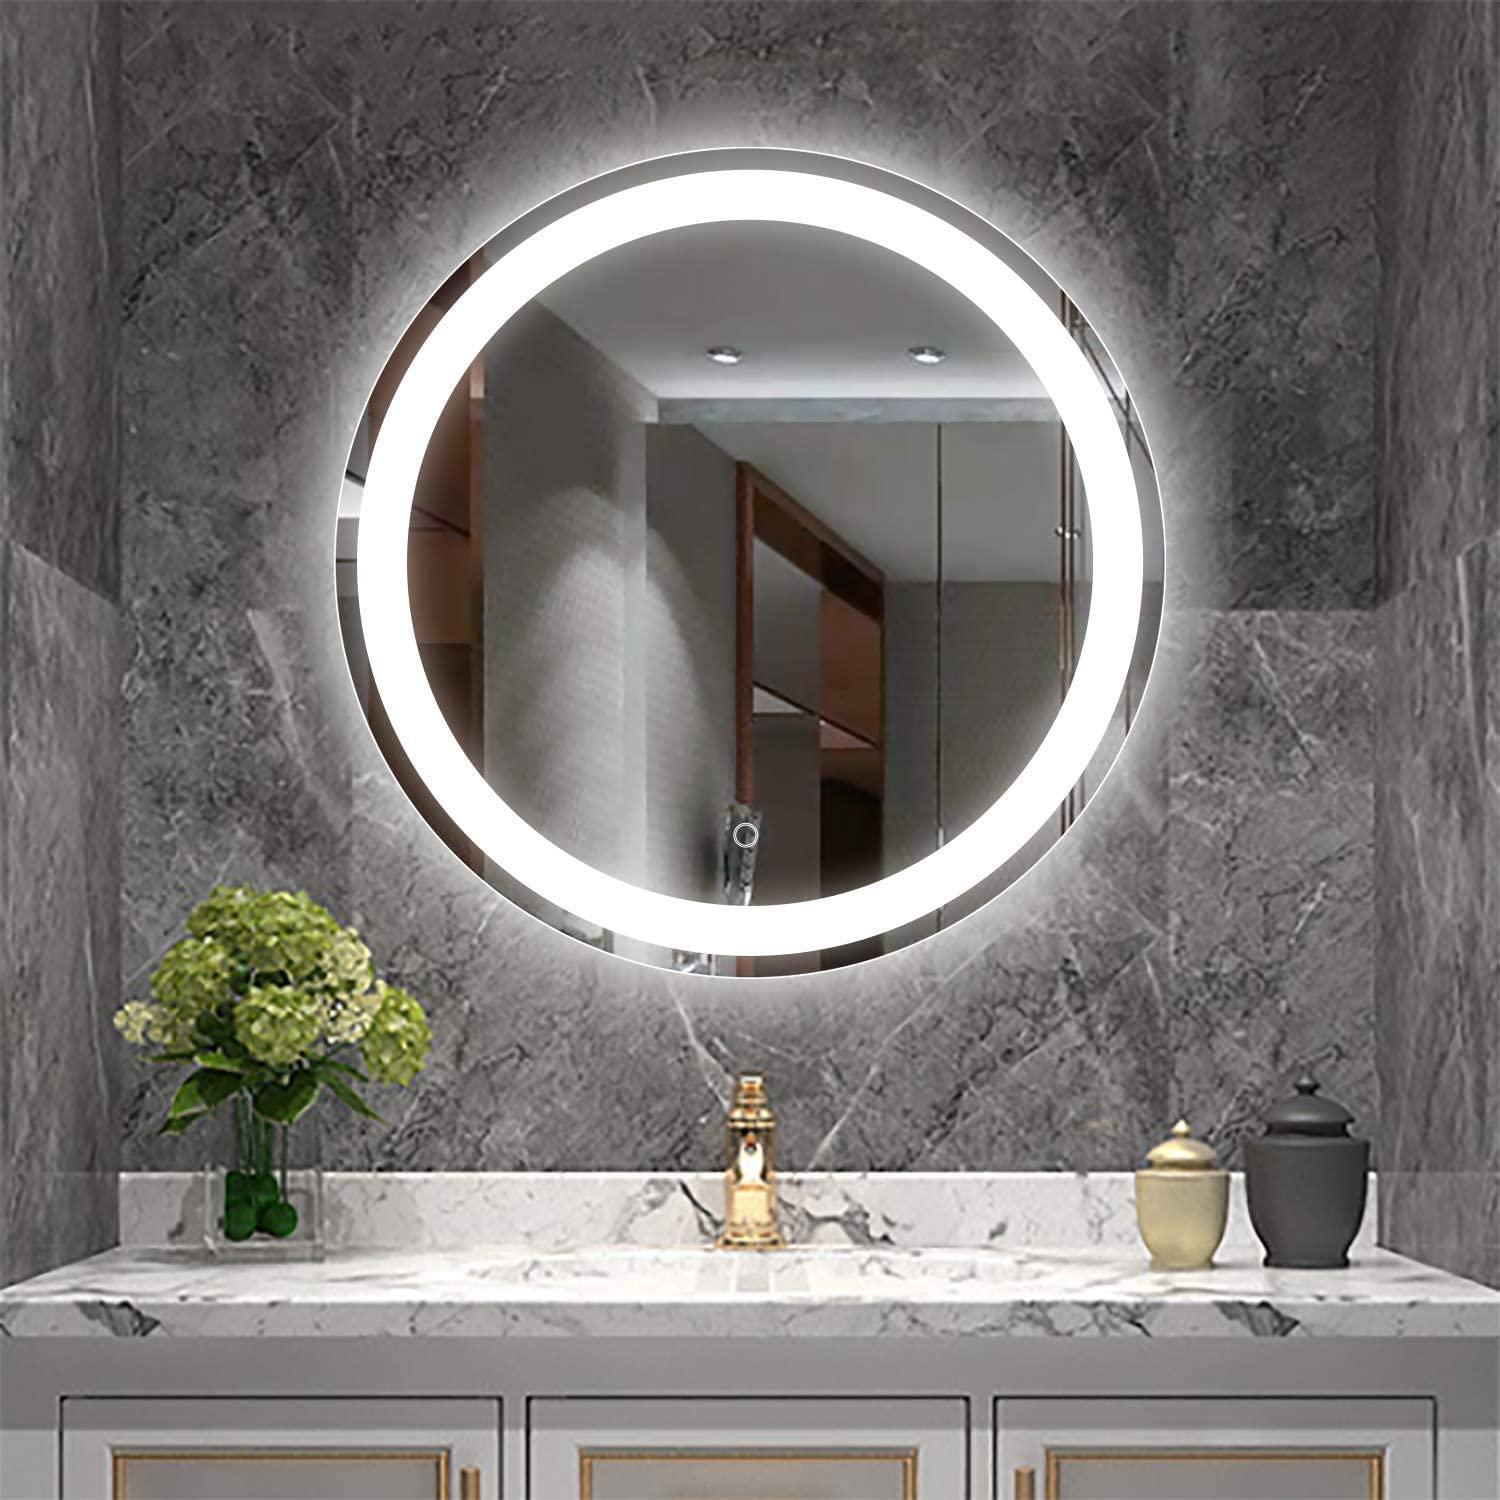 7. Bathroom Vanity Mirrors